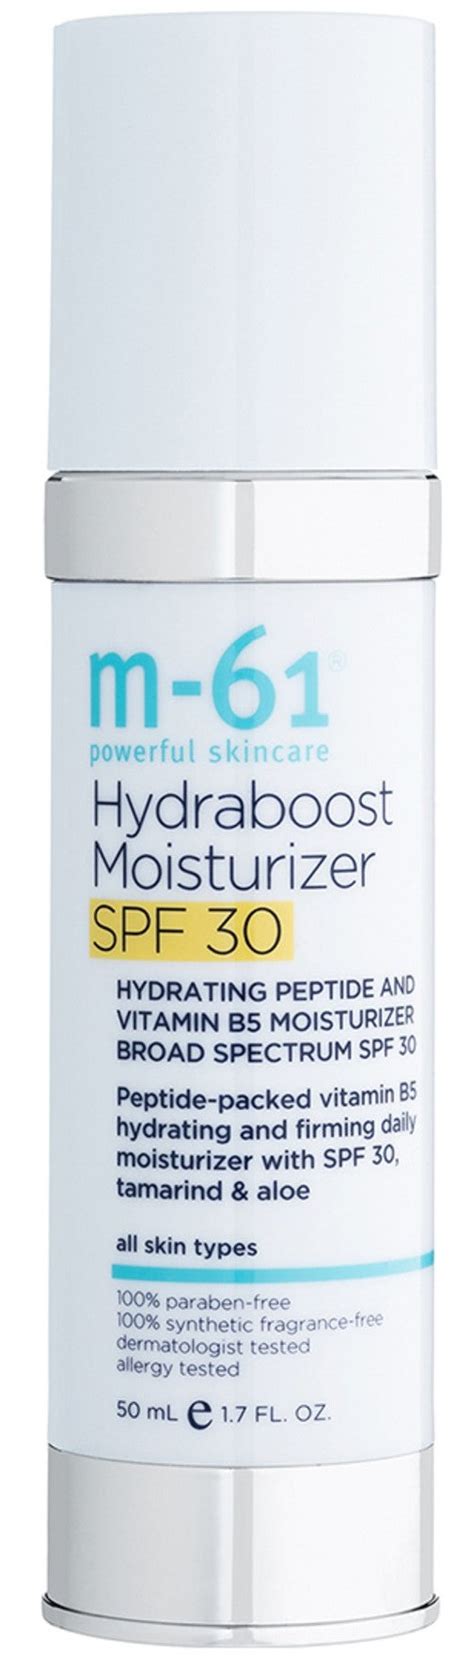 M 61 Hydraboost Moisturizer Spf 30 Ingredients Explained